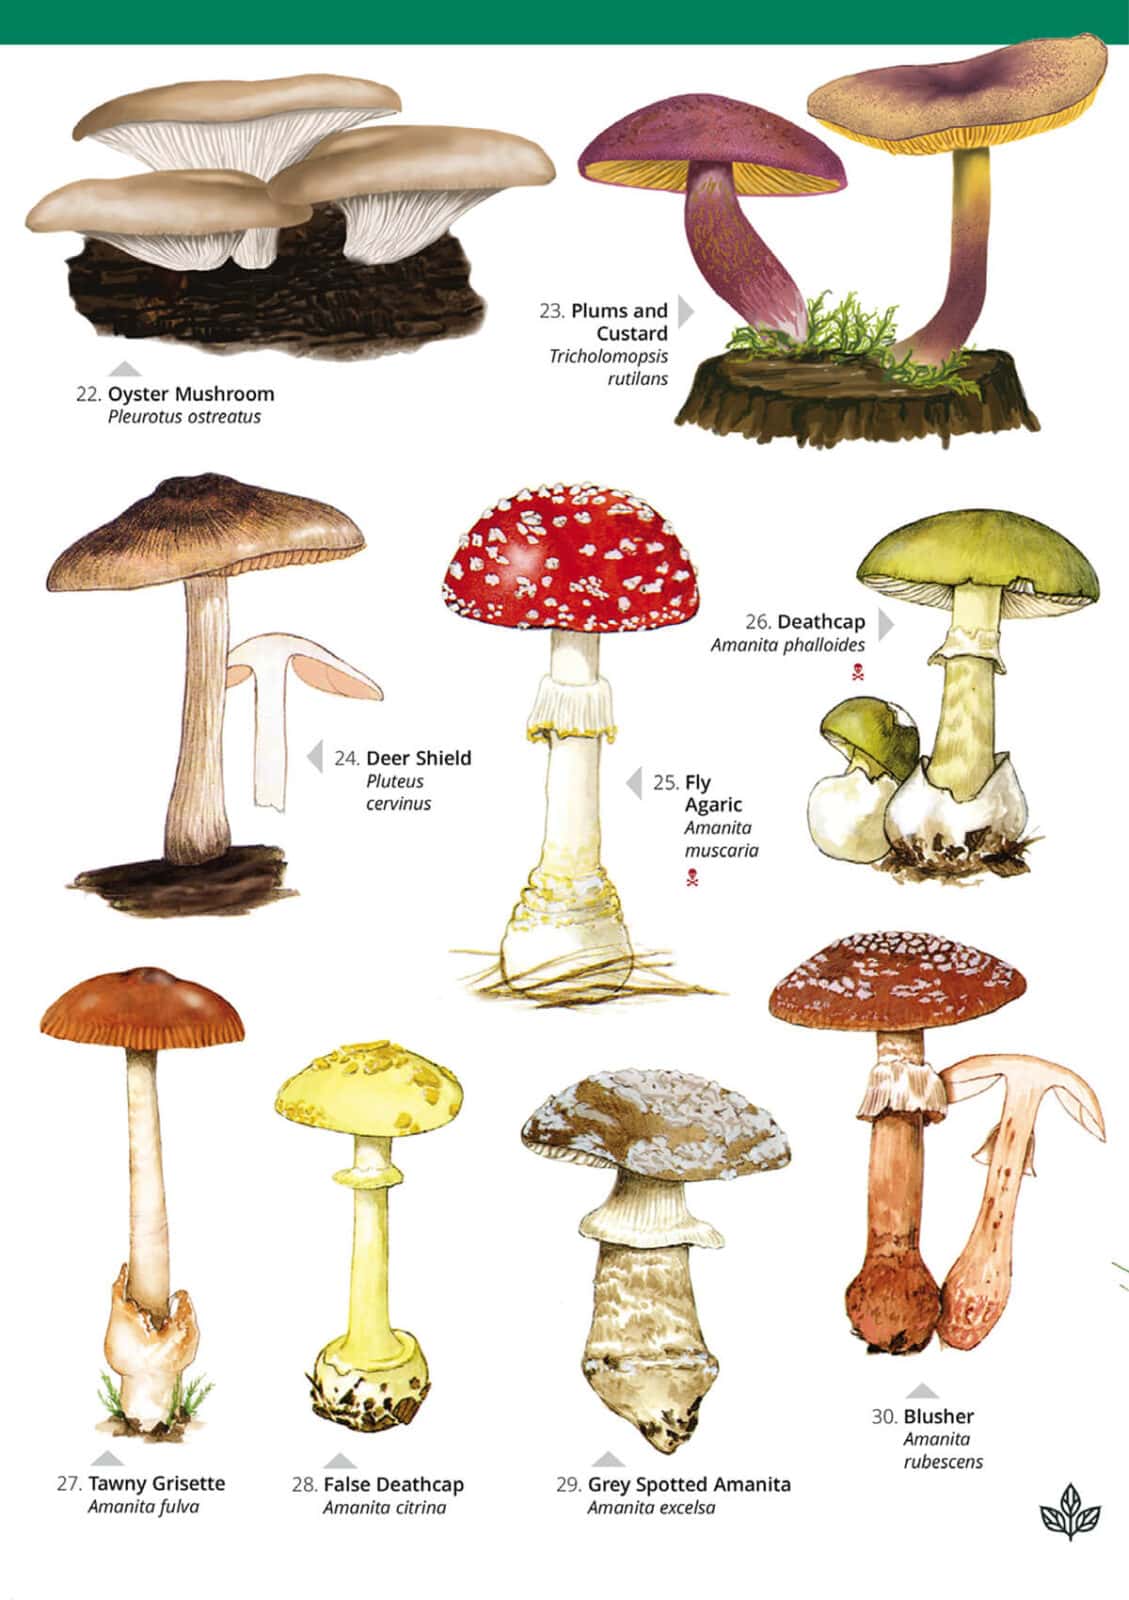 gilled fungi